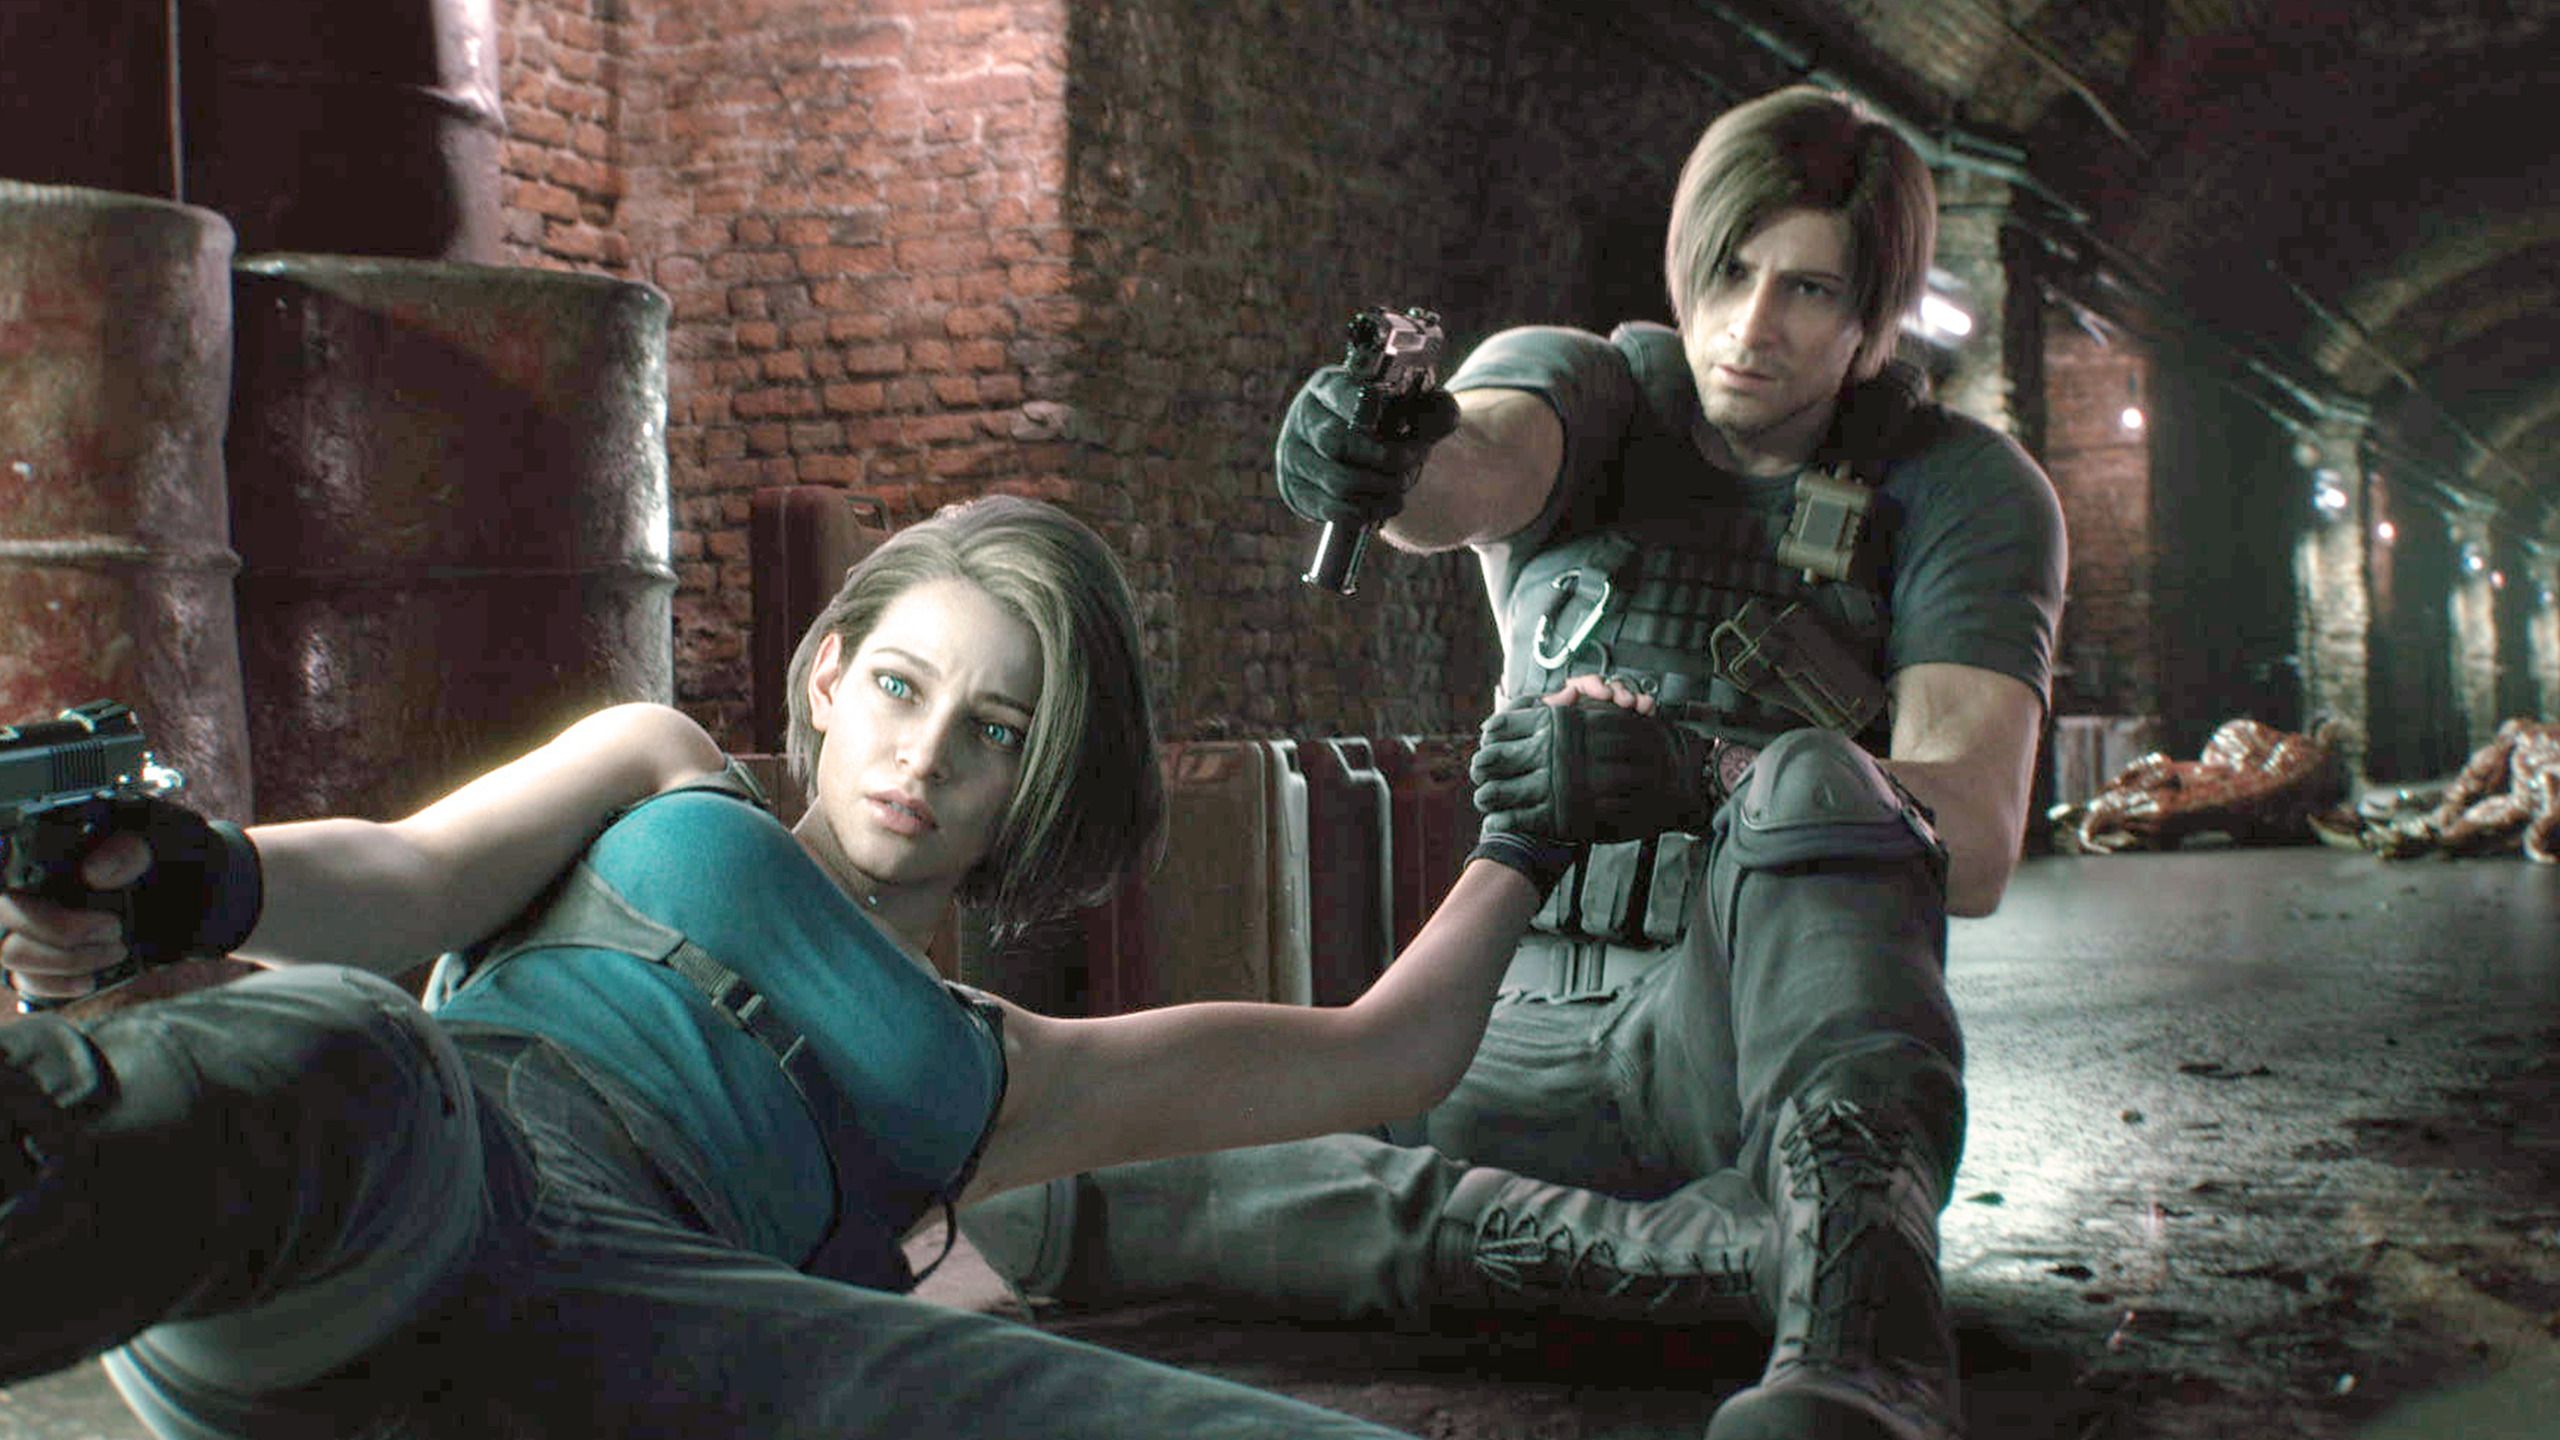 Resident Evil: Death Island Review – Hogan Reviews